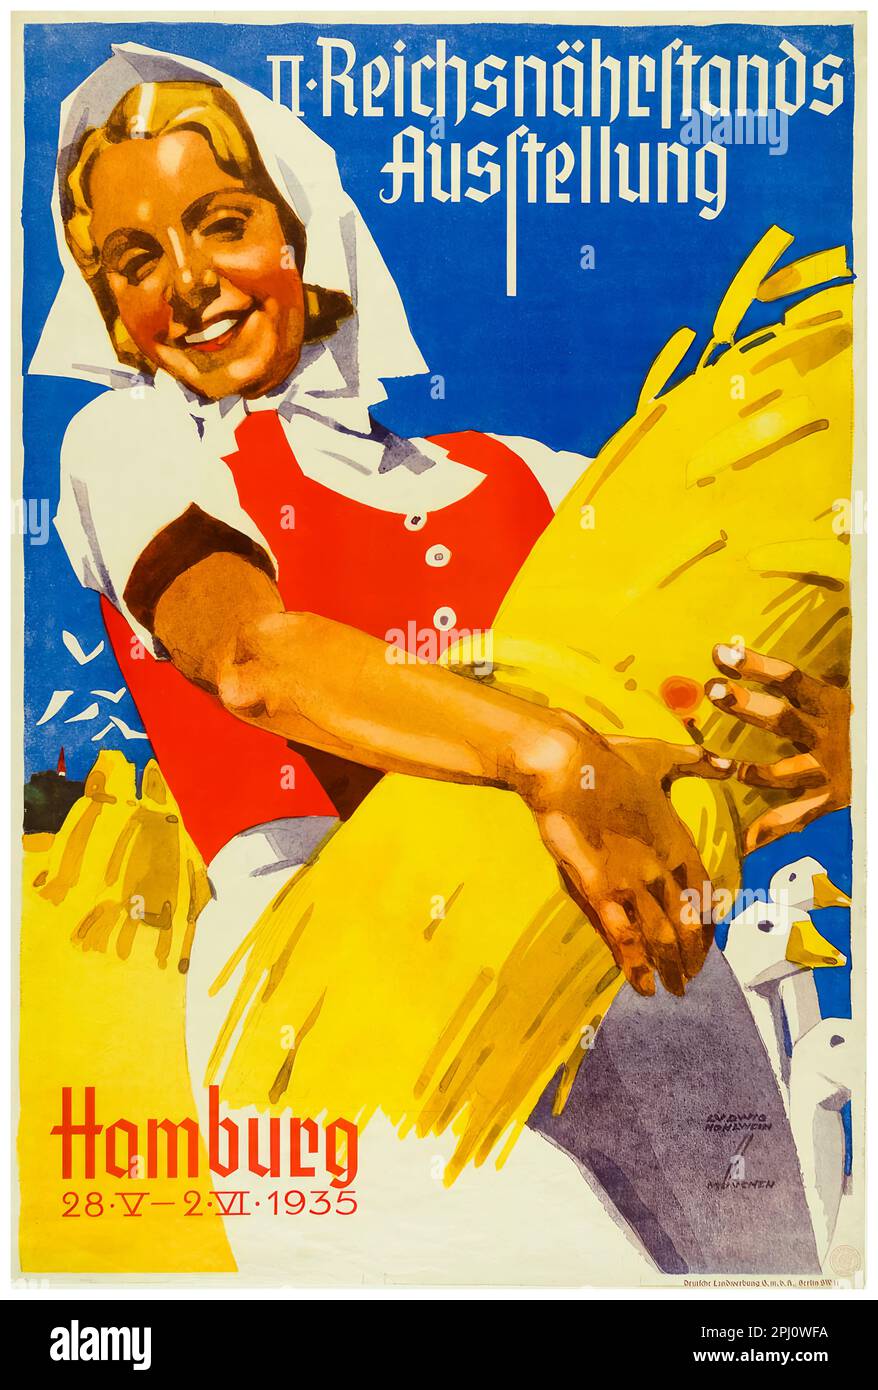 Second Reich Nutrition Exhibition, Hambourg 1935, affiche de Ludwig Hohlwein, Allemagne 1935 Banque D'Images